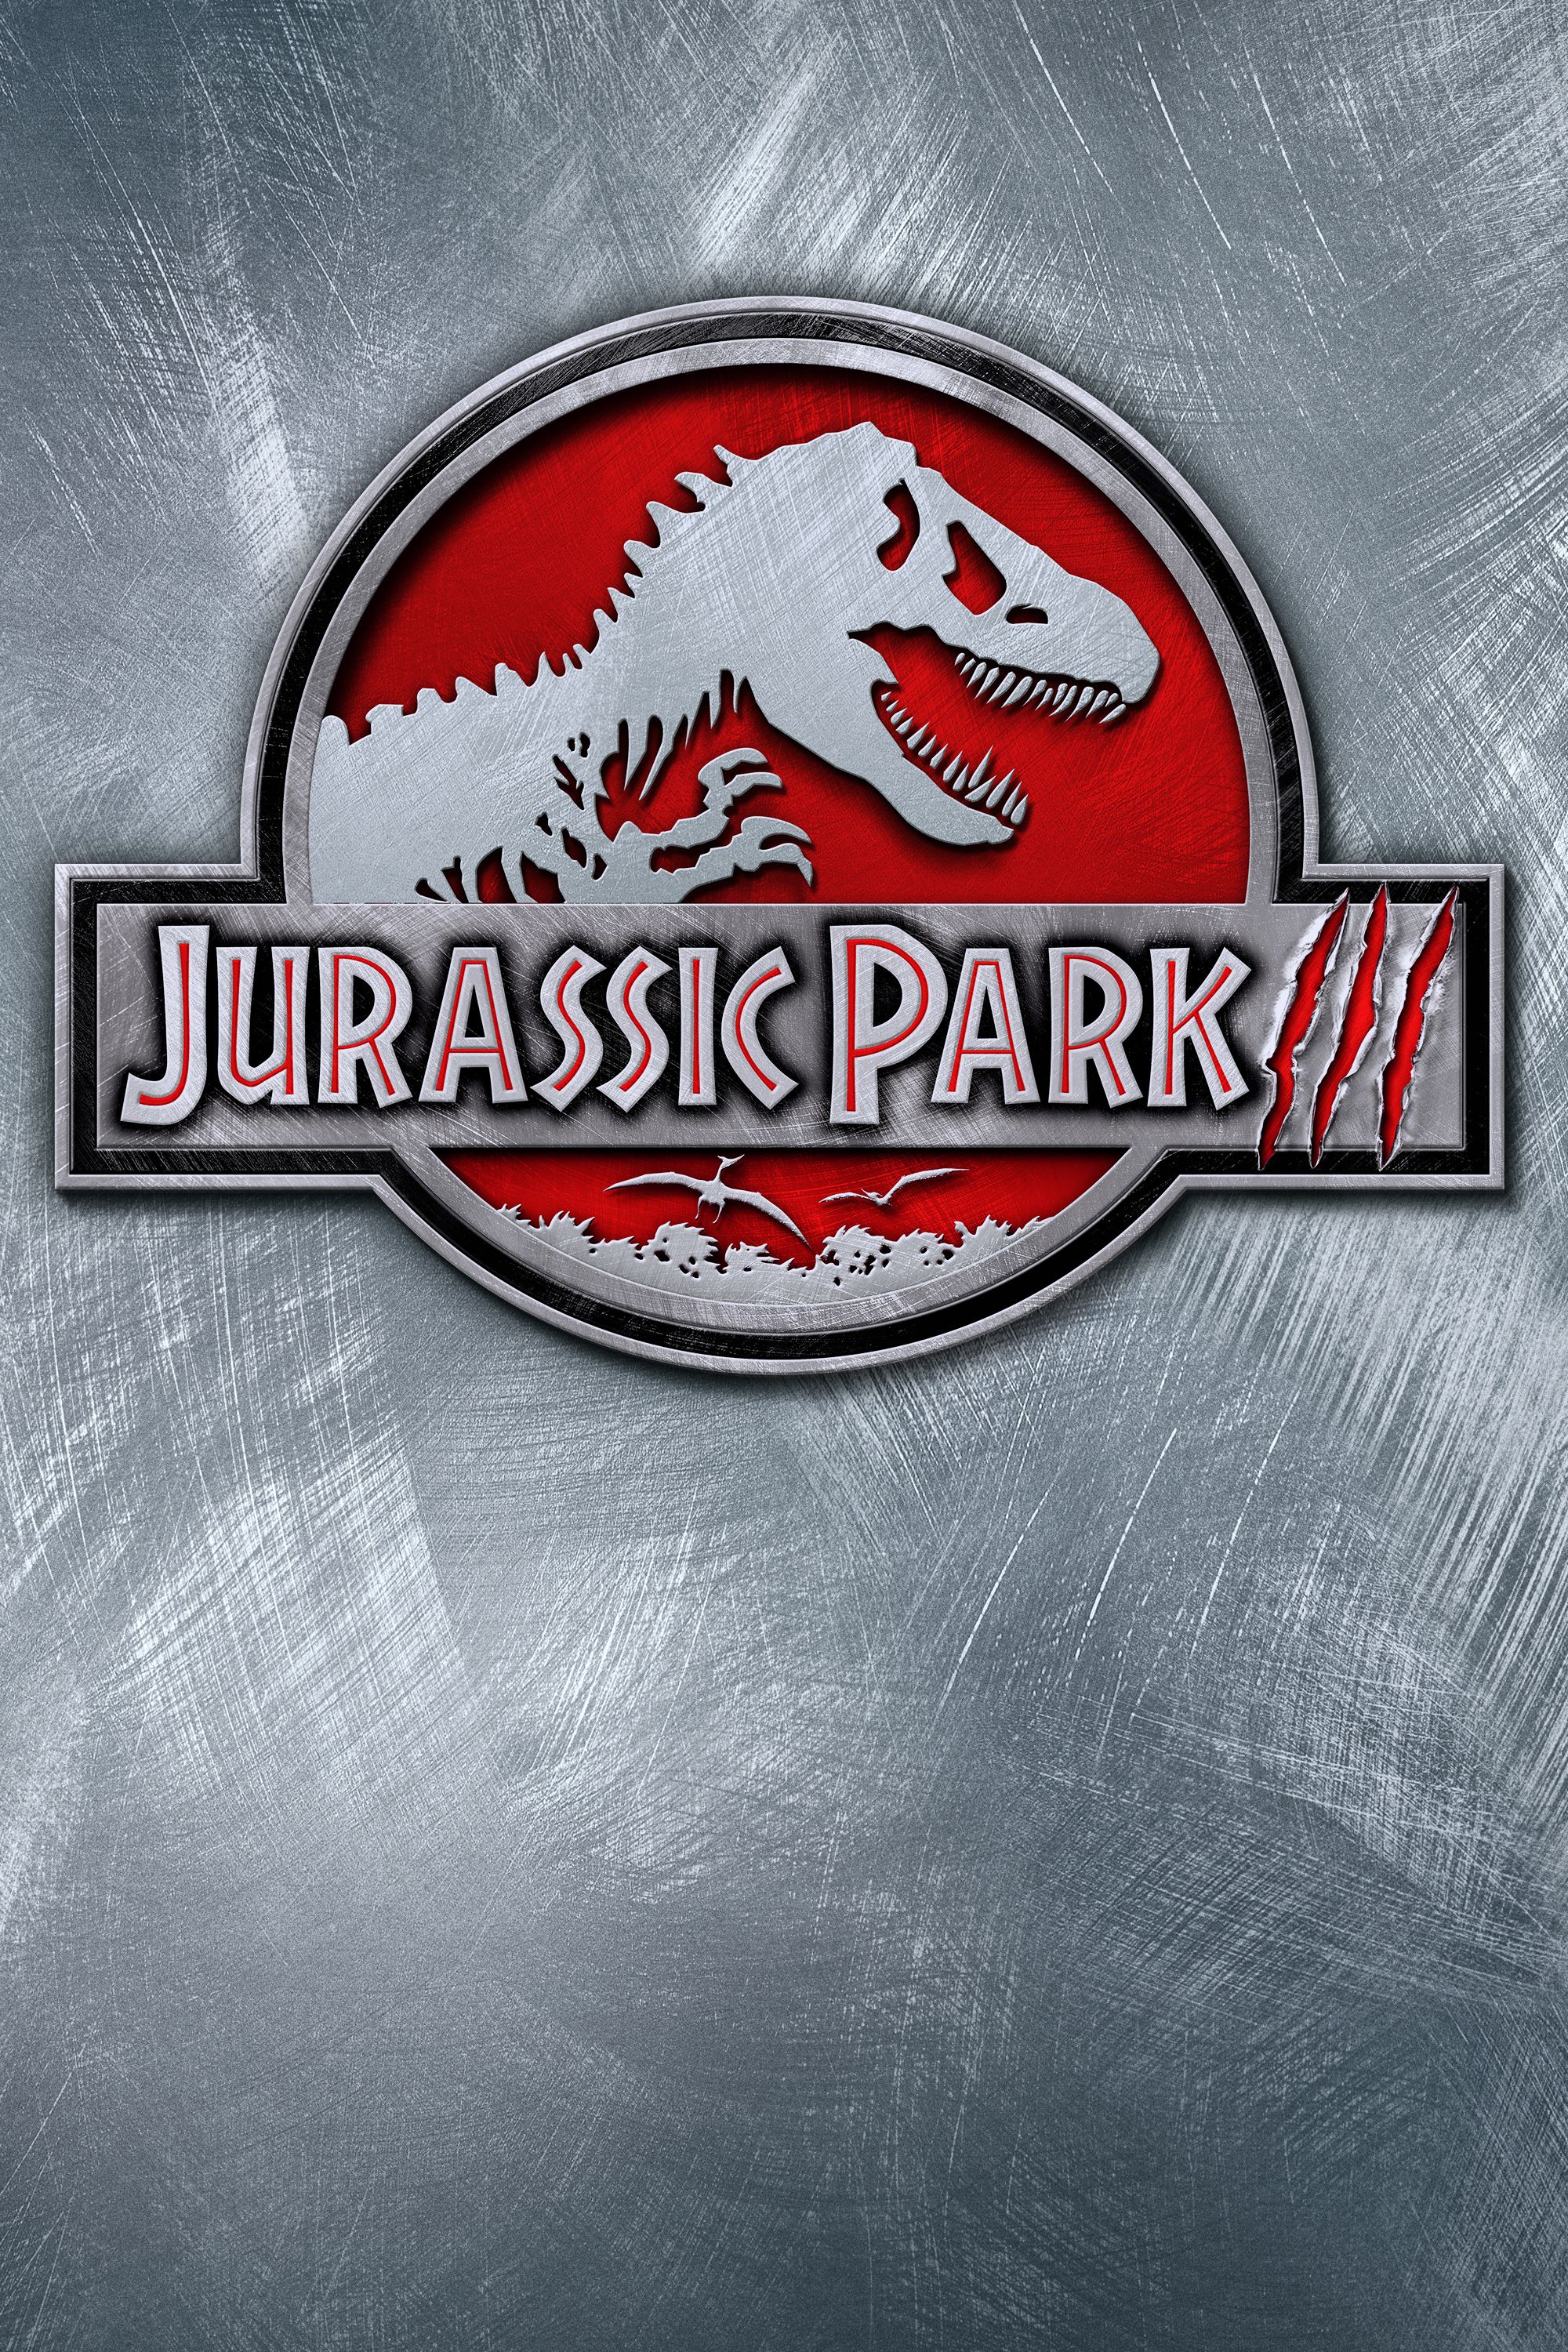 Jurassic Park III, Full Movie